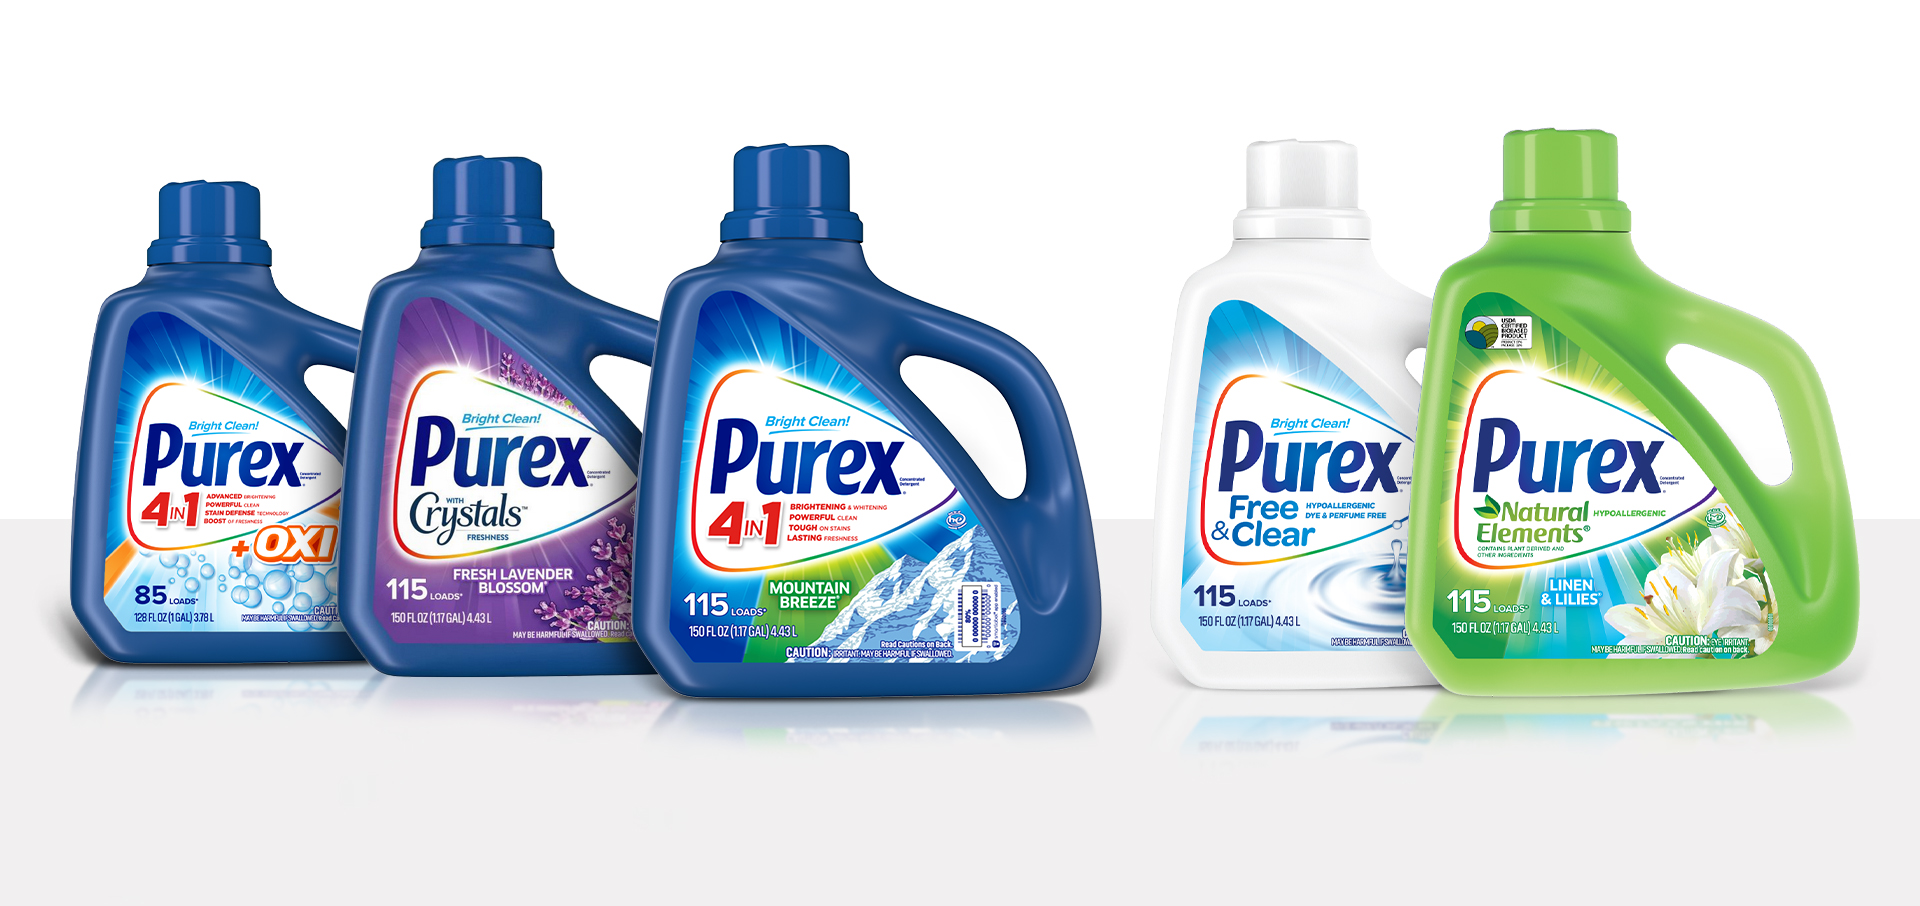 Purex Laundry Detergent Family Line up